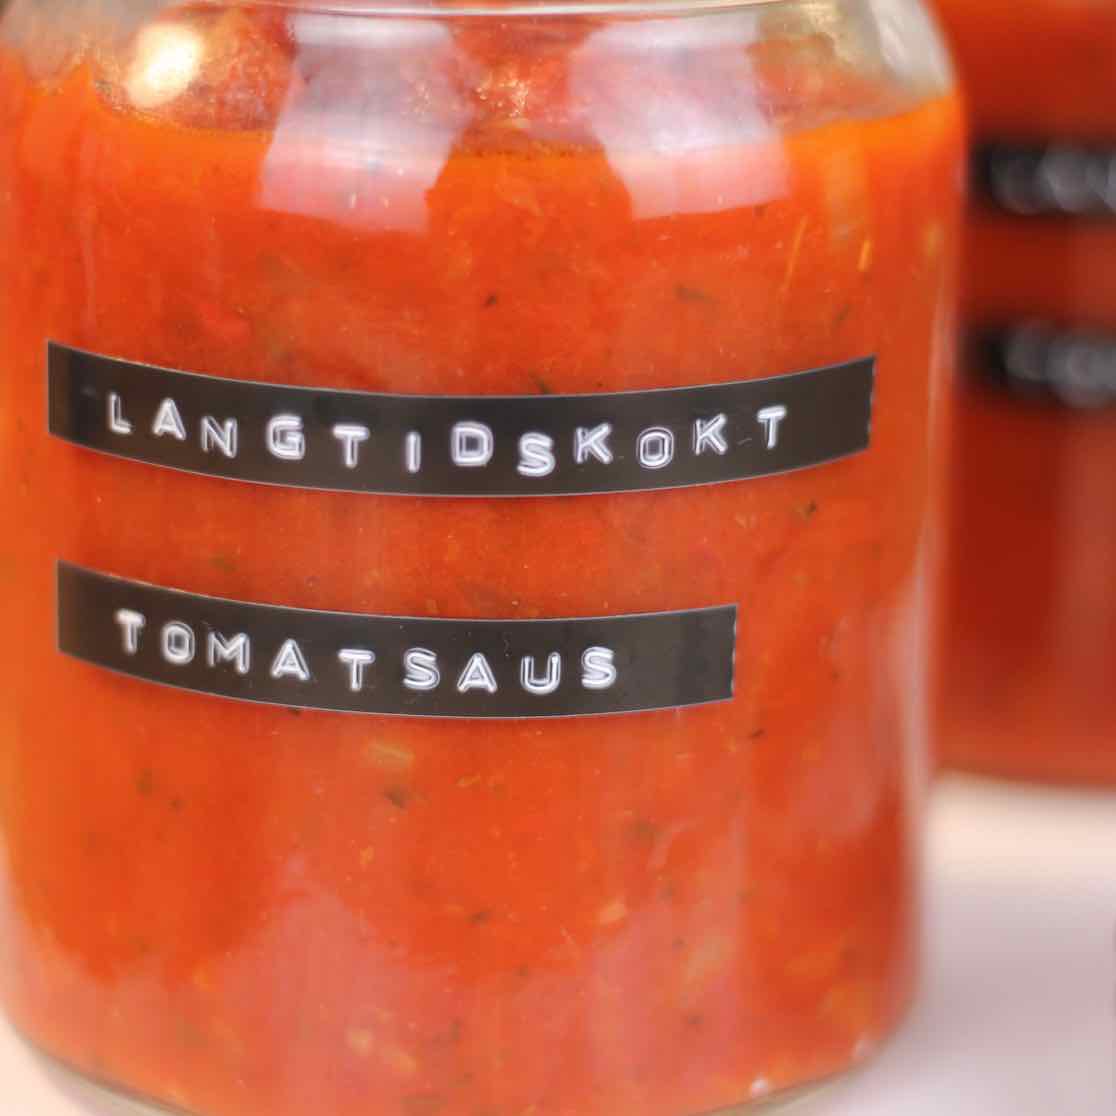 Vegansk langtidskokt tomatsaus